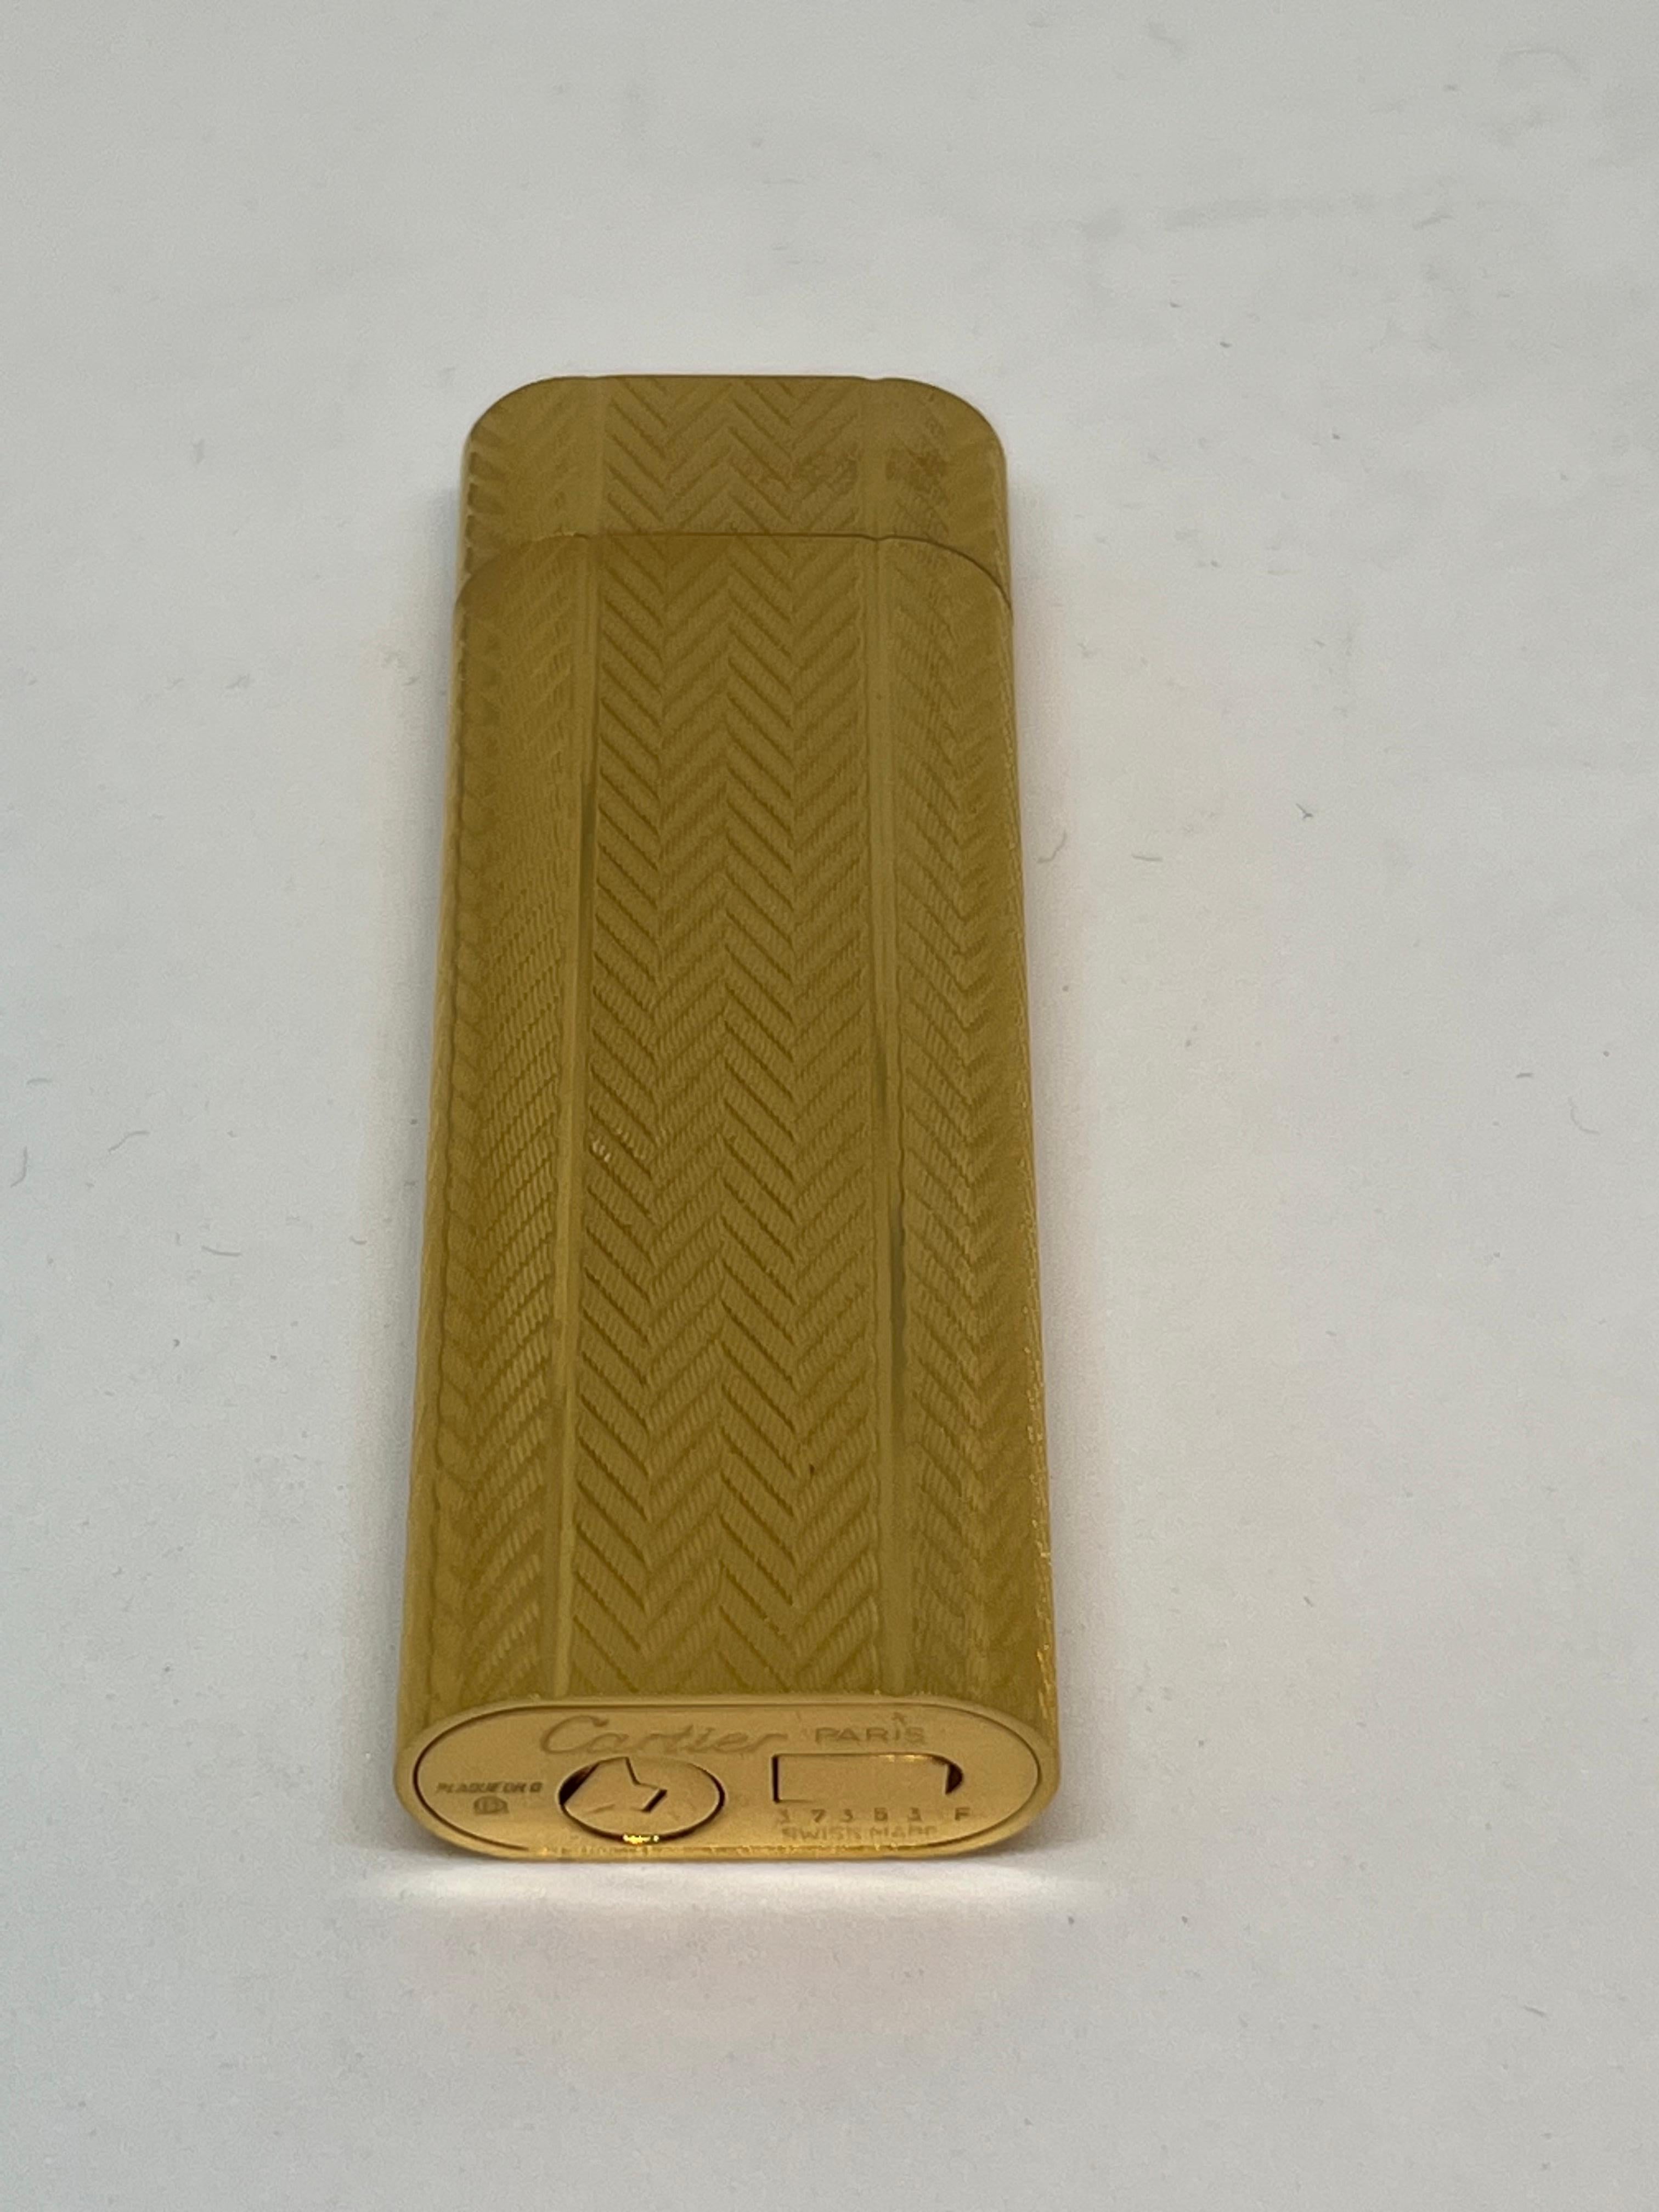 A Les Must De Cartier Paris 18k gold plated lighter 11